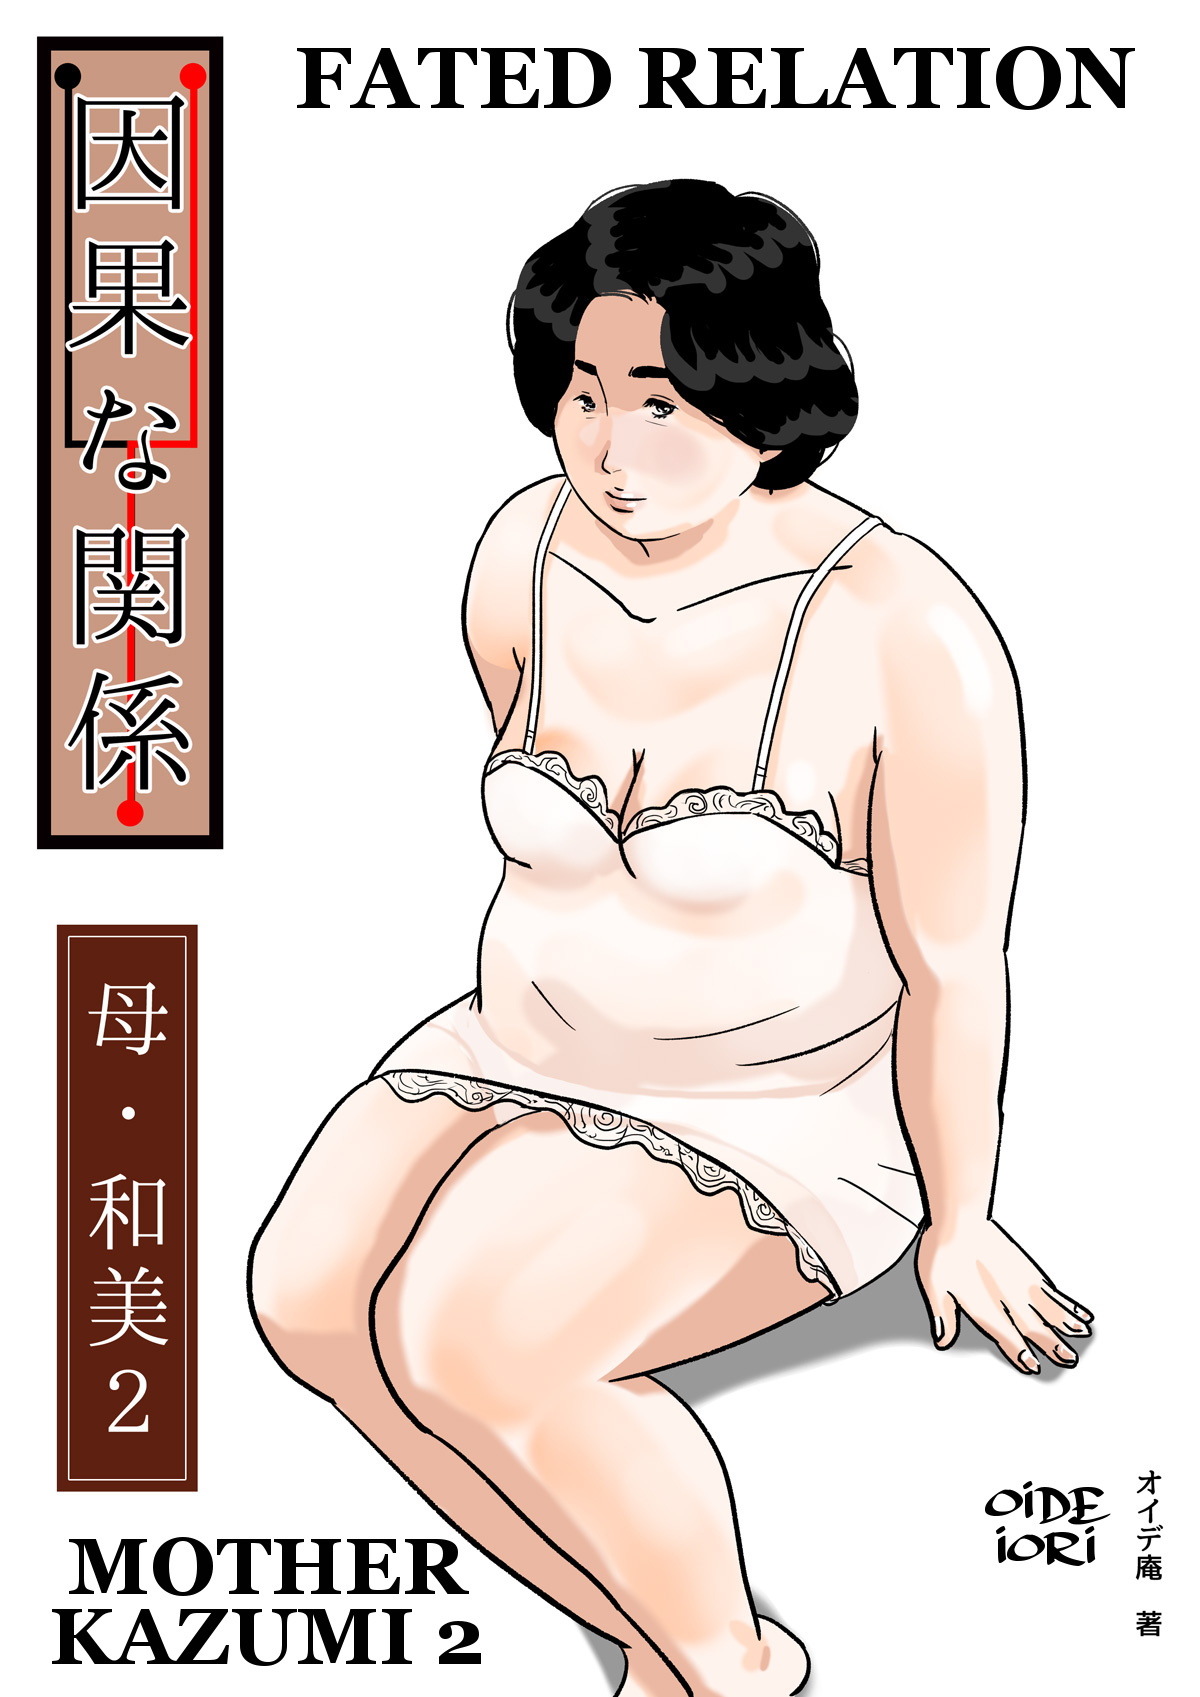 Oide Iori Fated Relation Mother Kazumi 2 Hentai Comics